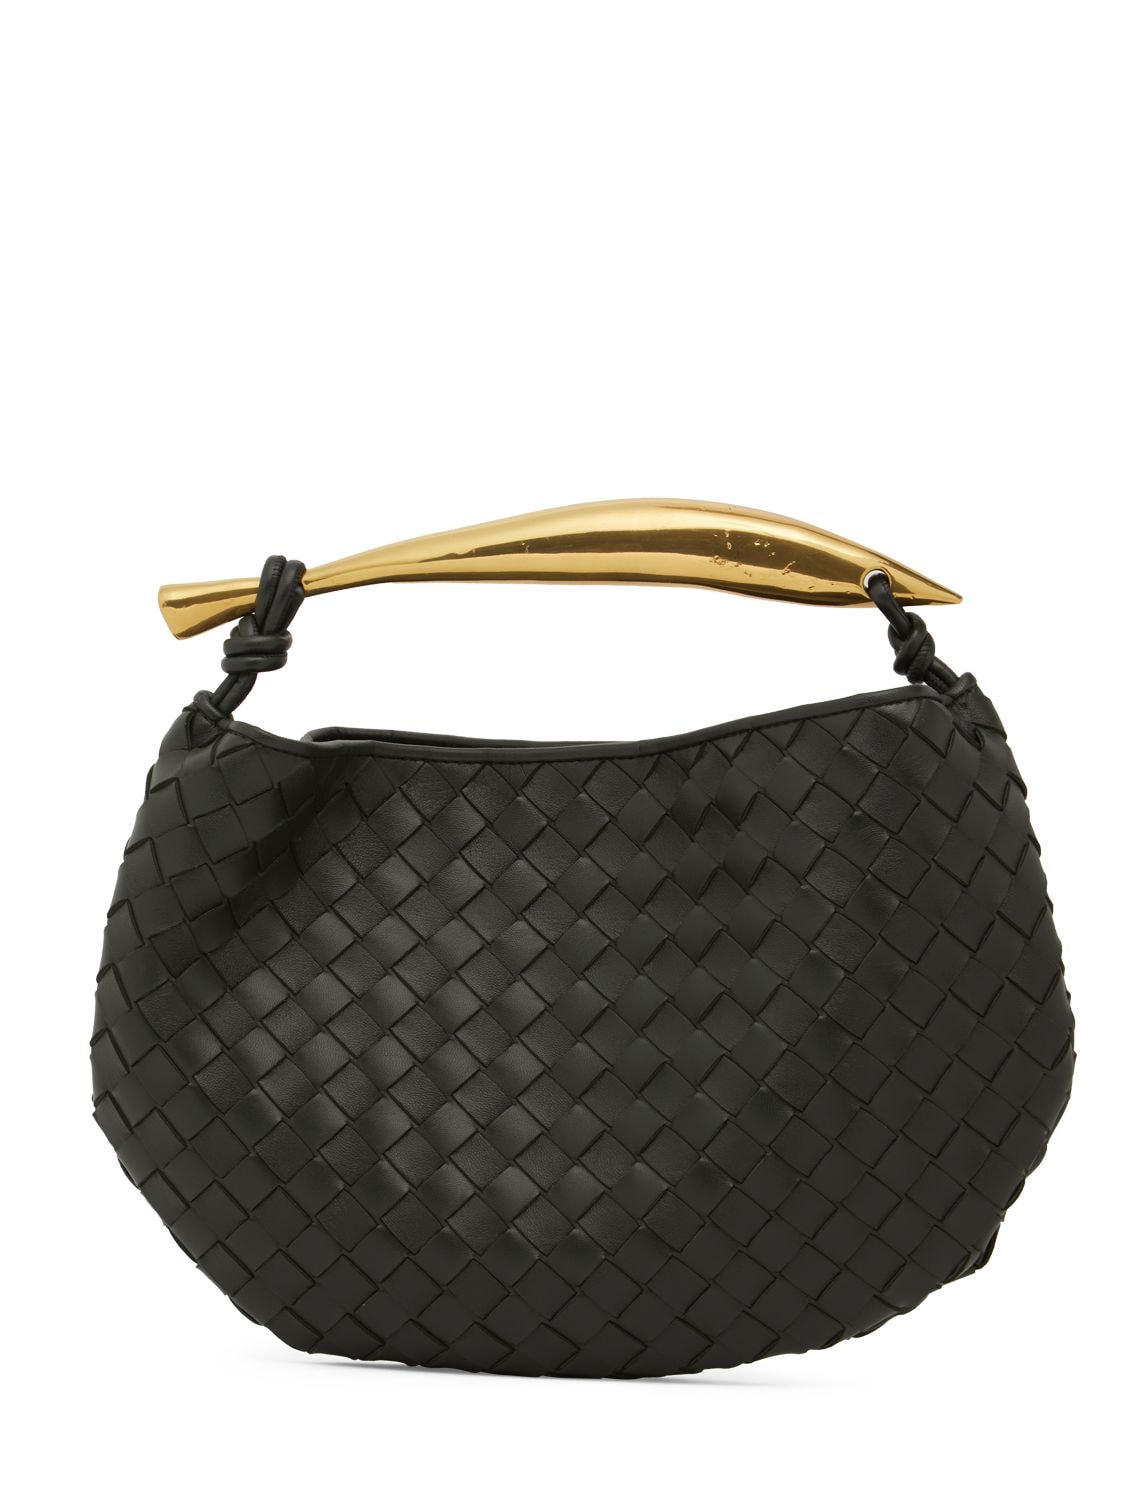 Image of Sardine Leather Top Handle Bag